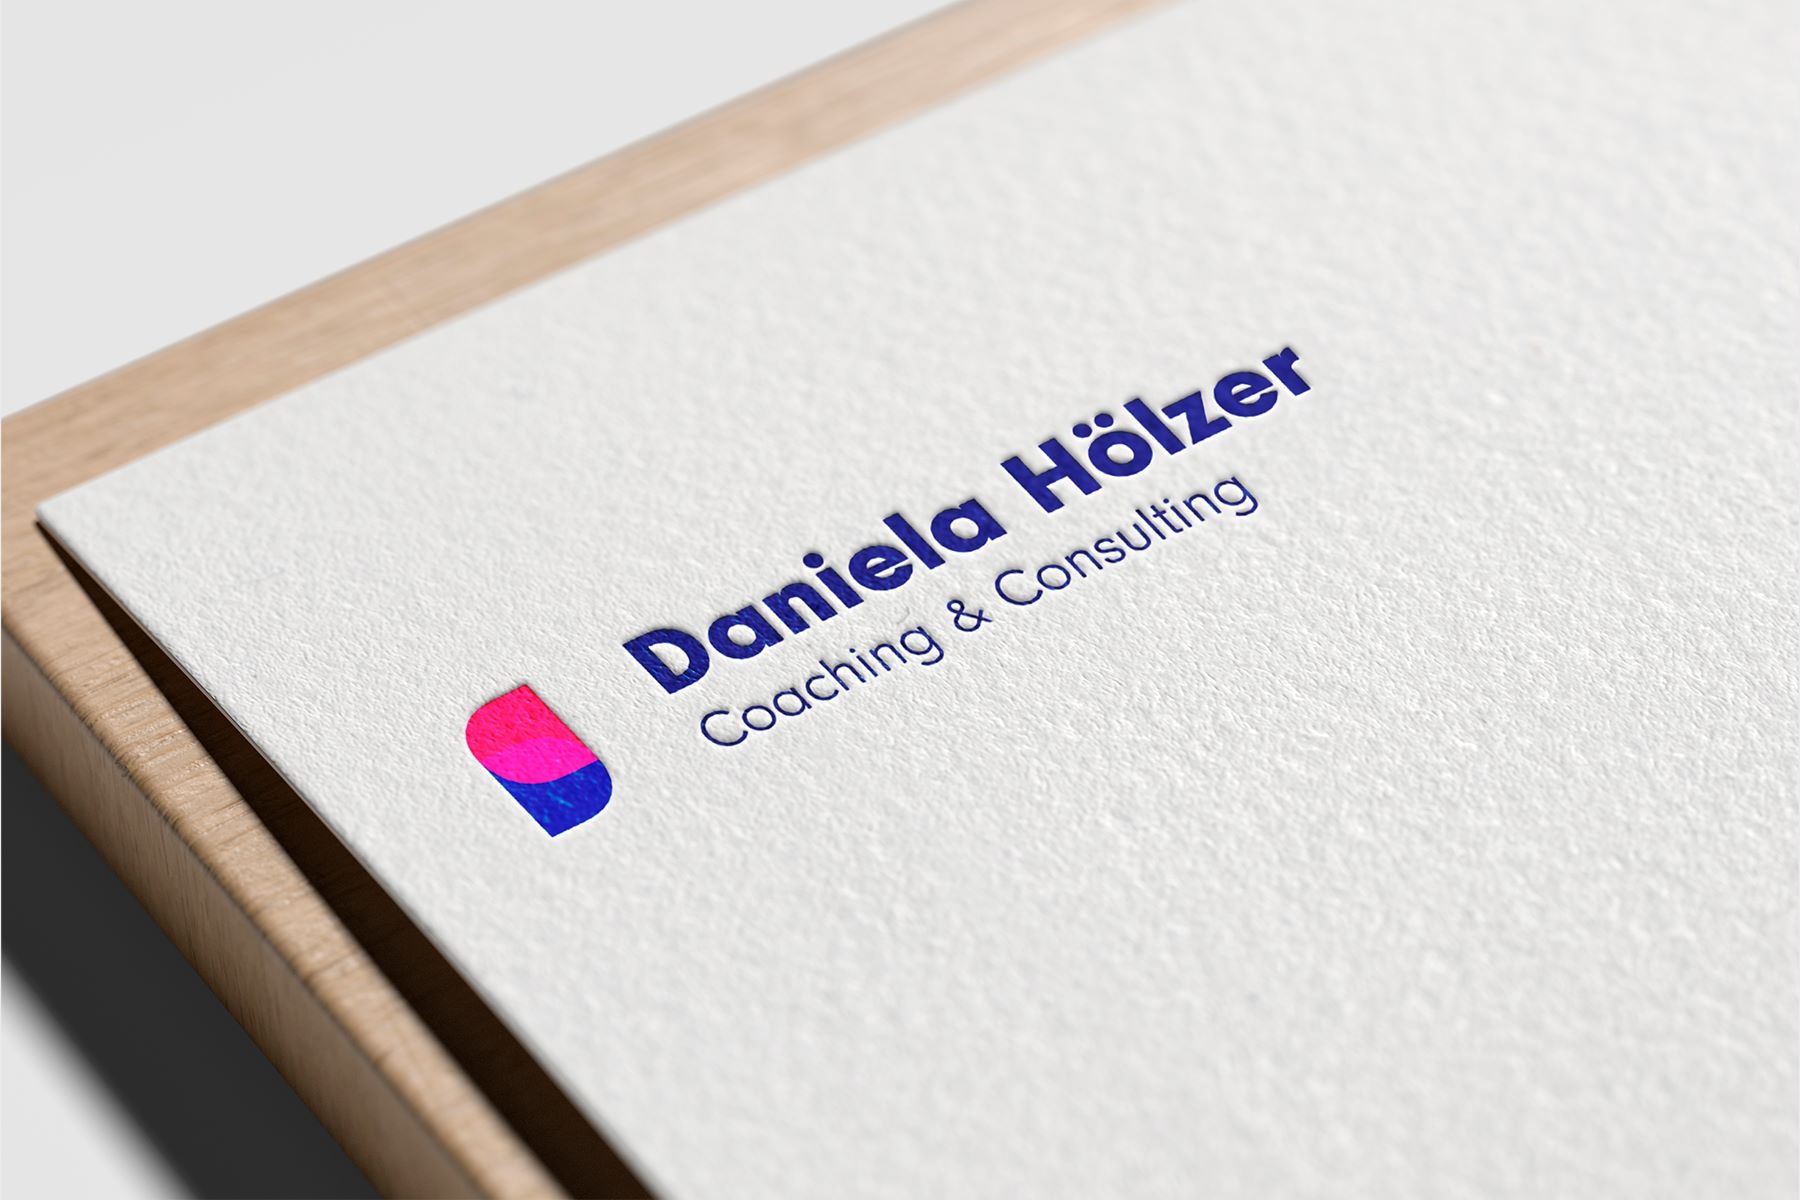 Daniela Hölzer Coaching & Consulting